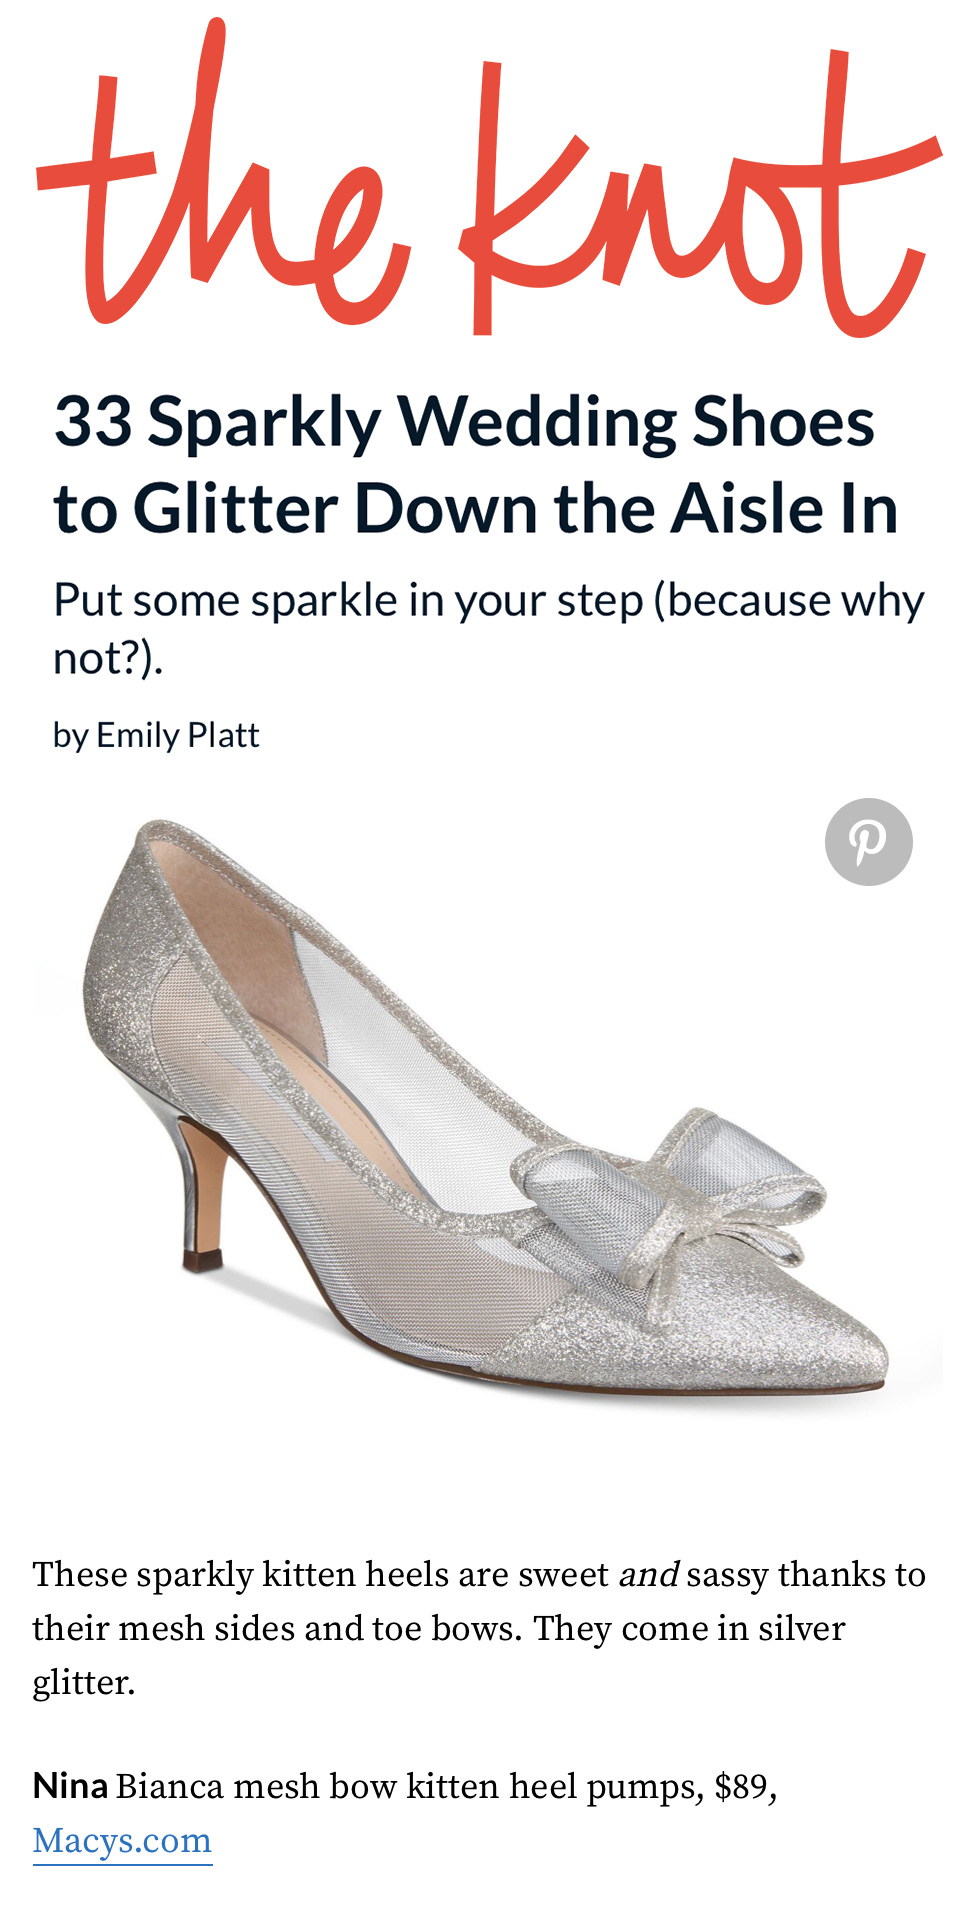 nina sparkly heels